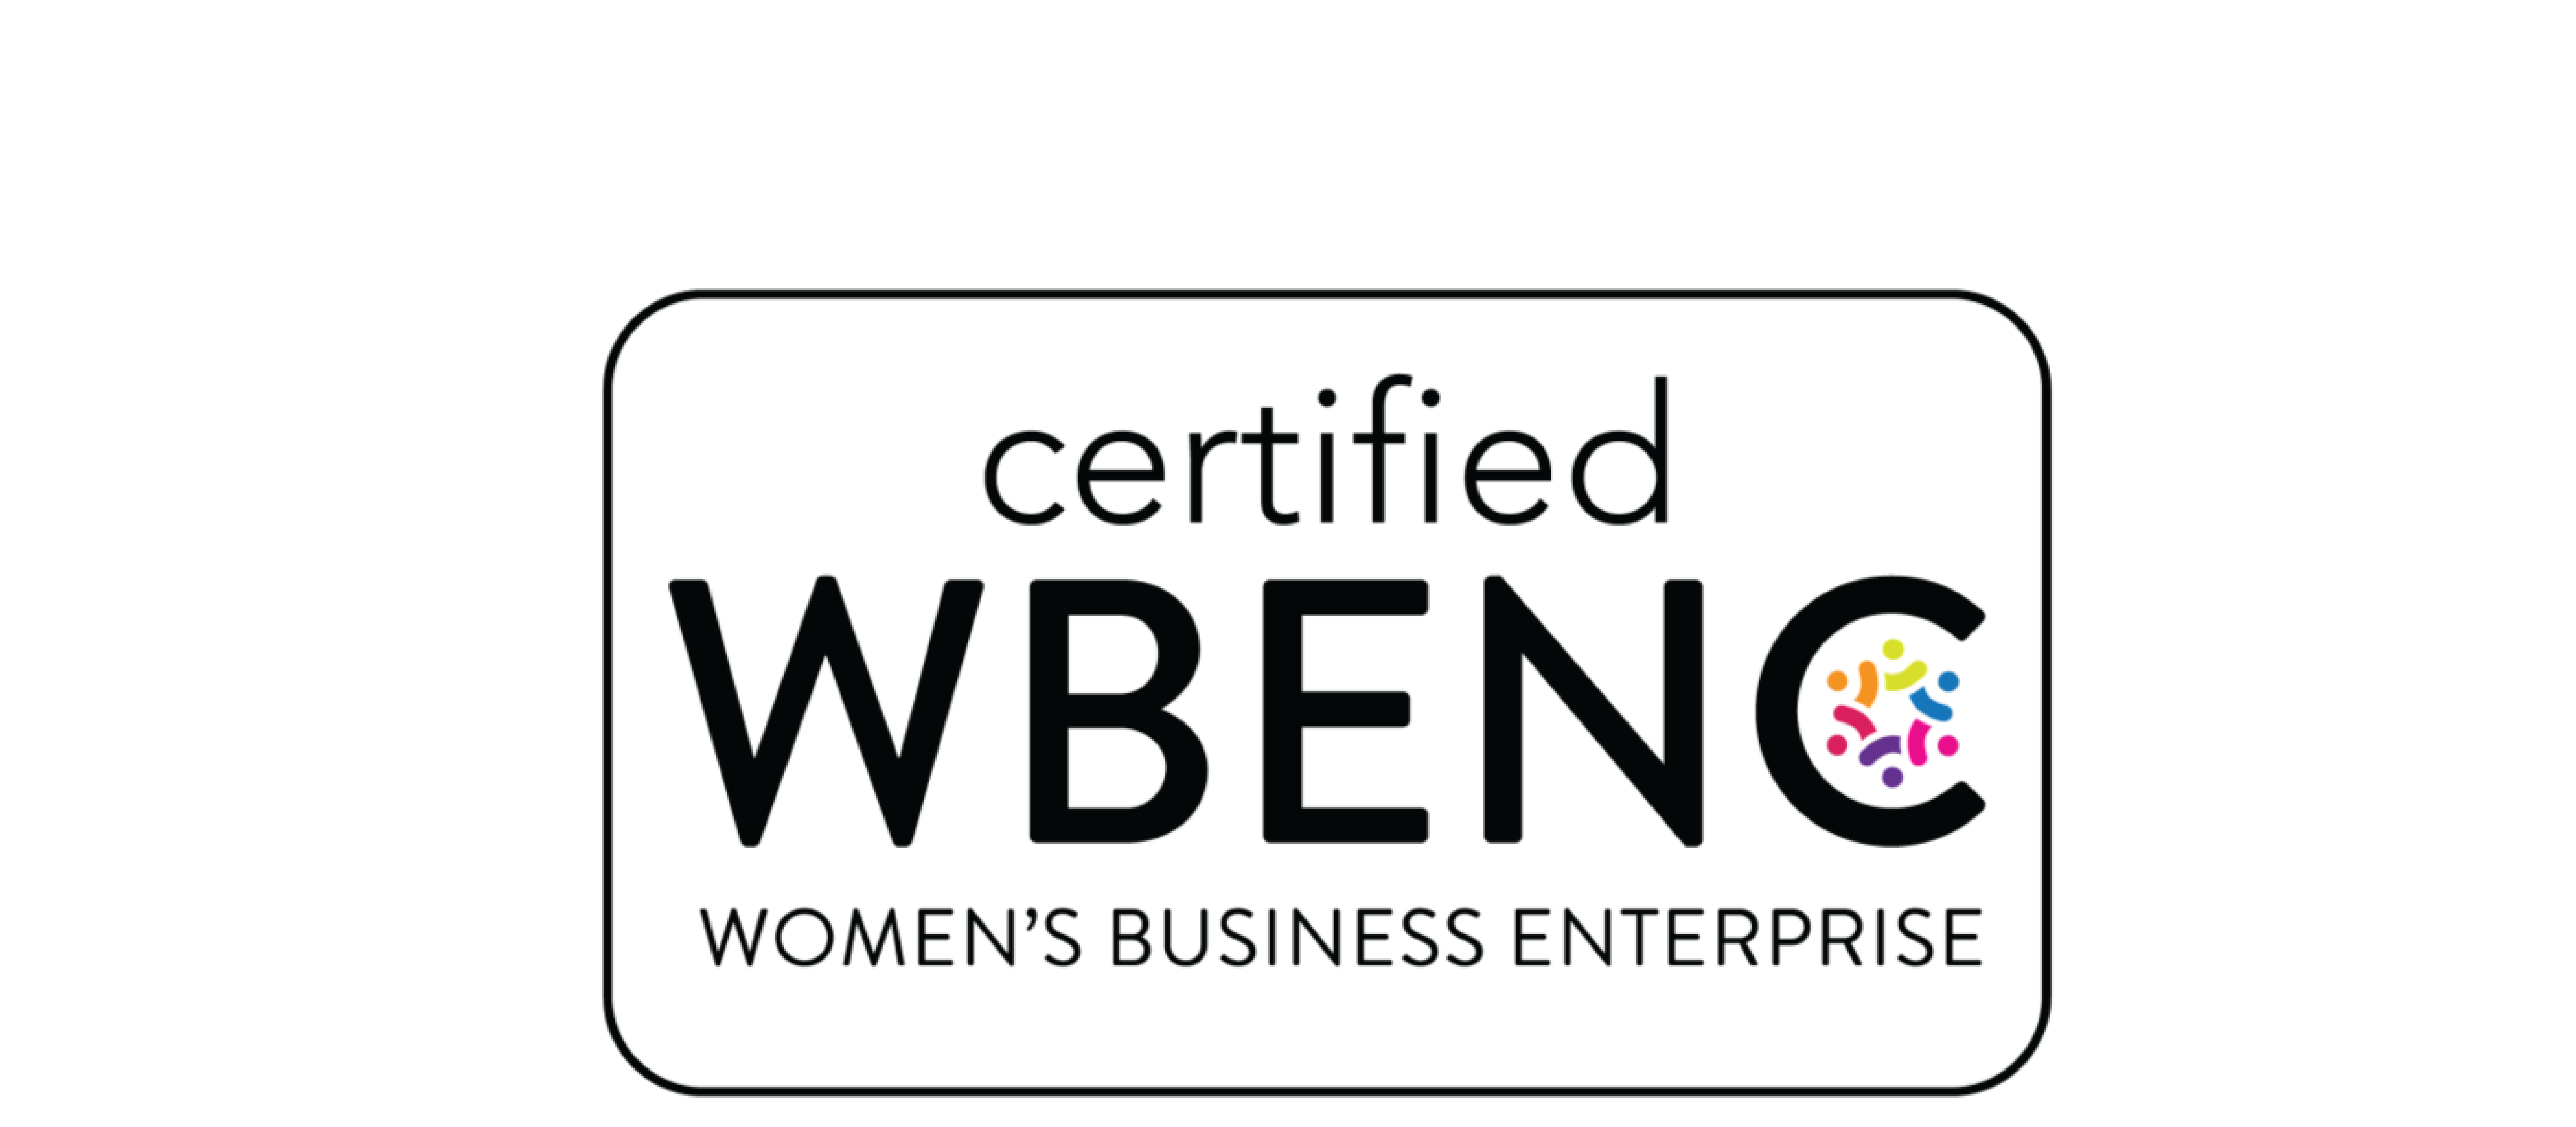 WBENC Certified@4x